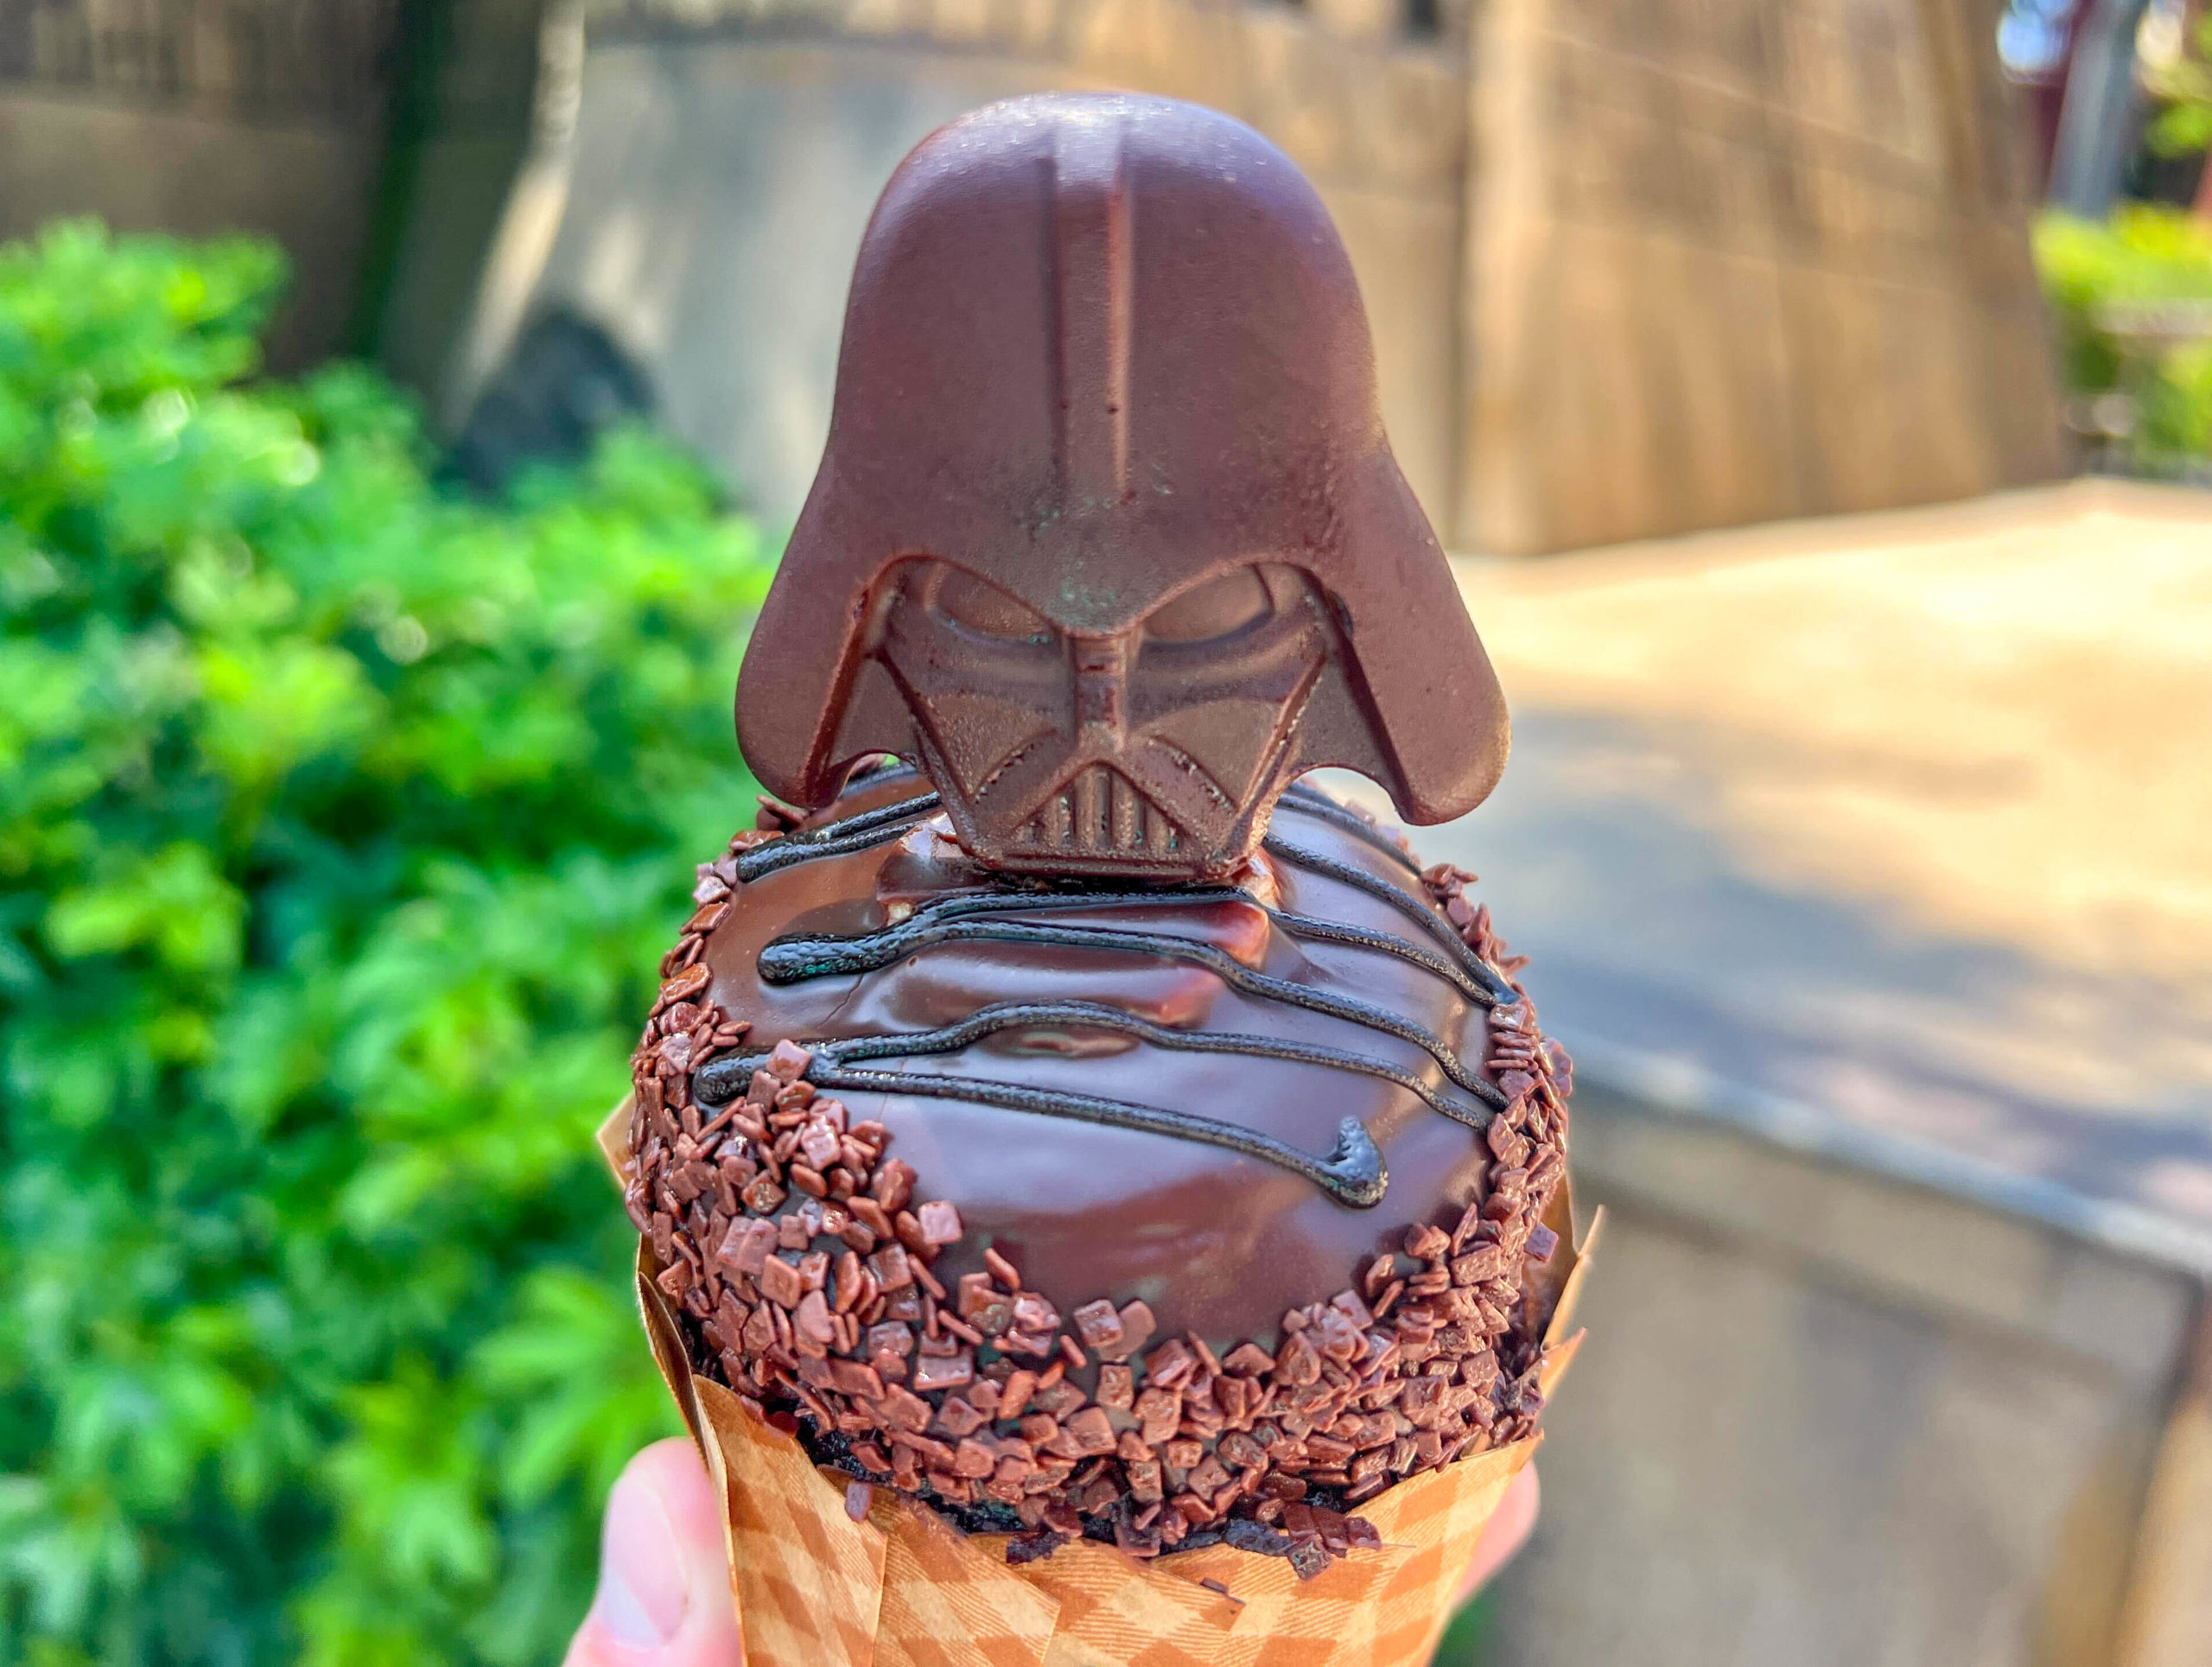 Darth Vader Cupcake